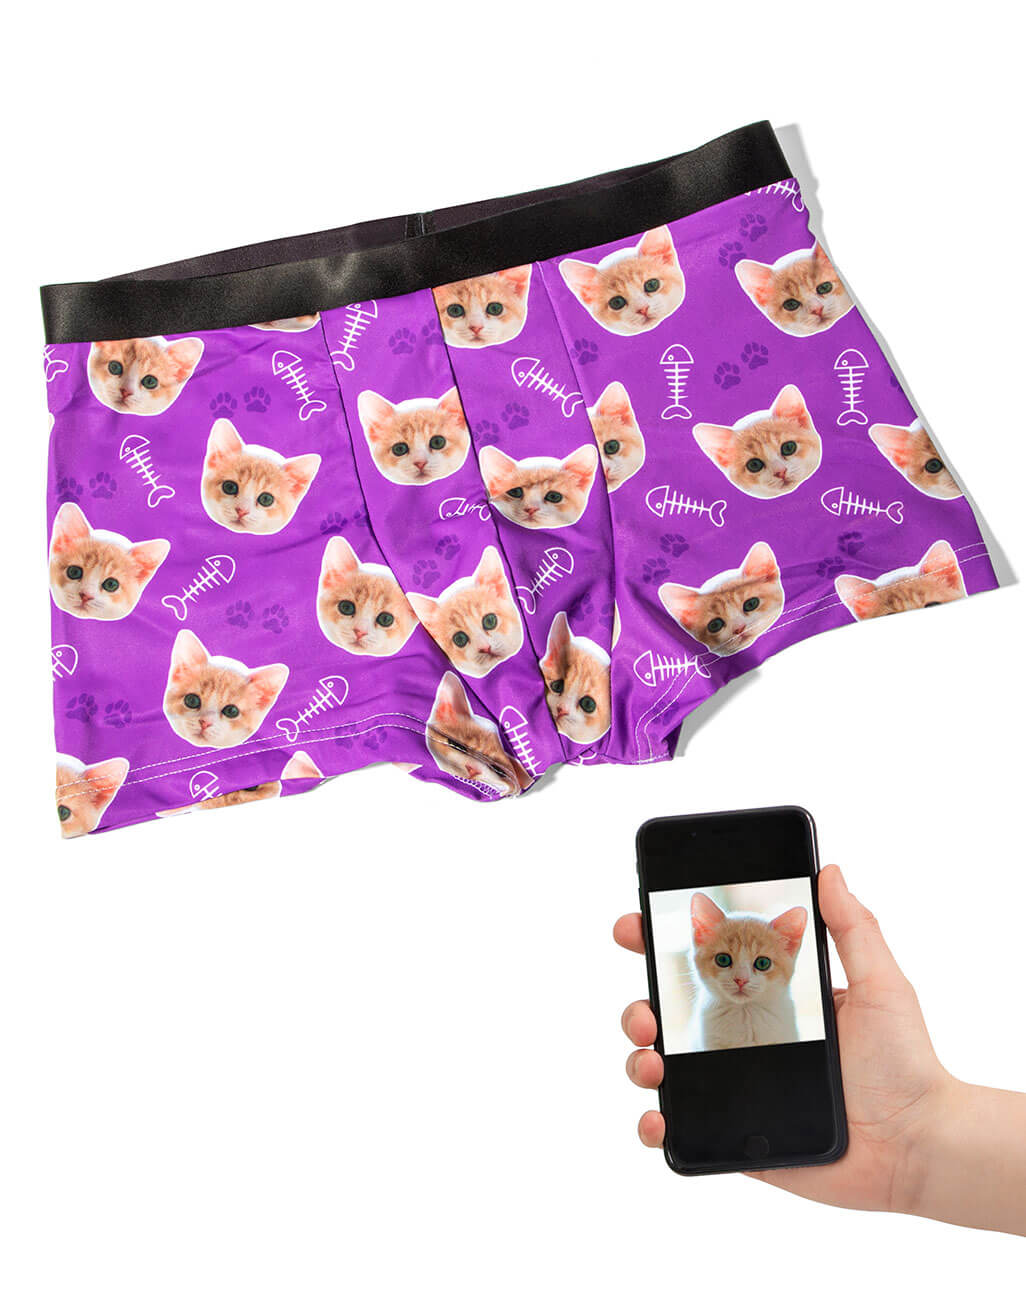  DIYKST Custom Women Underwear with Cat Personalized